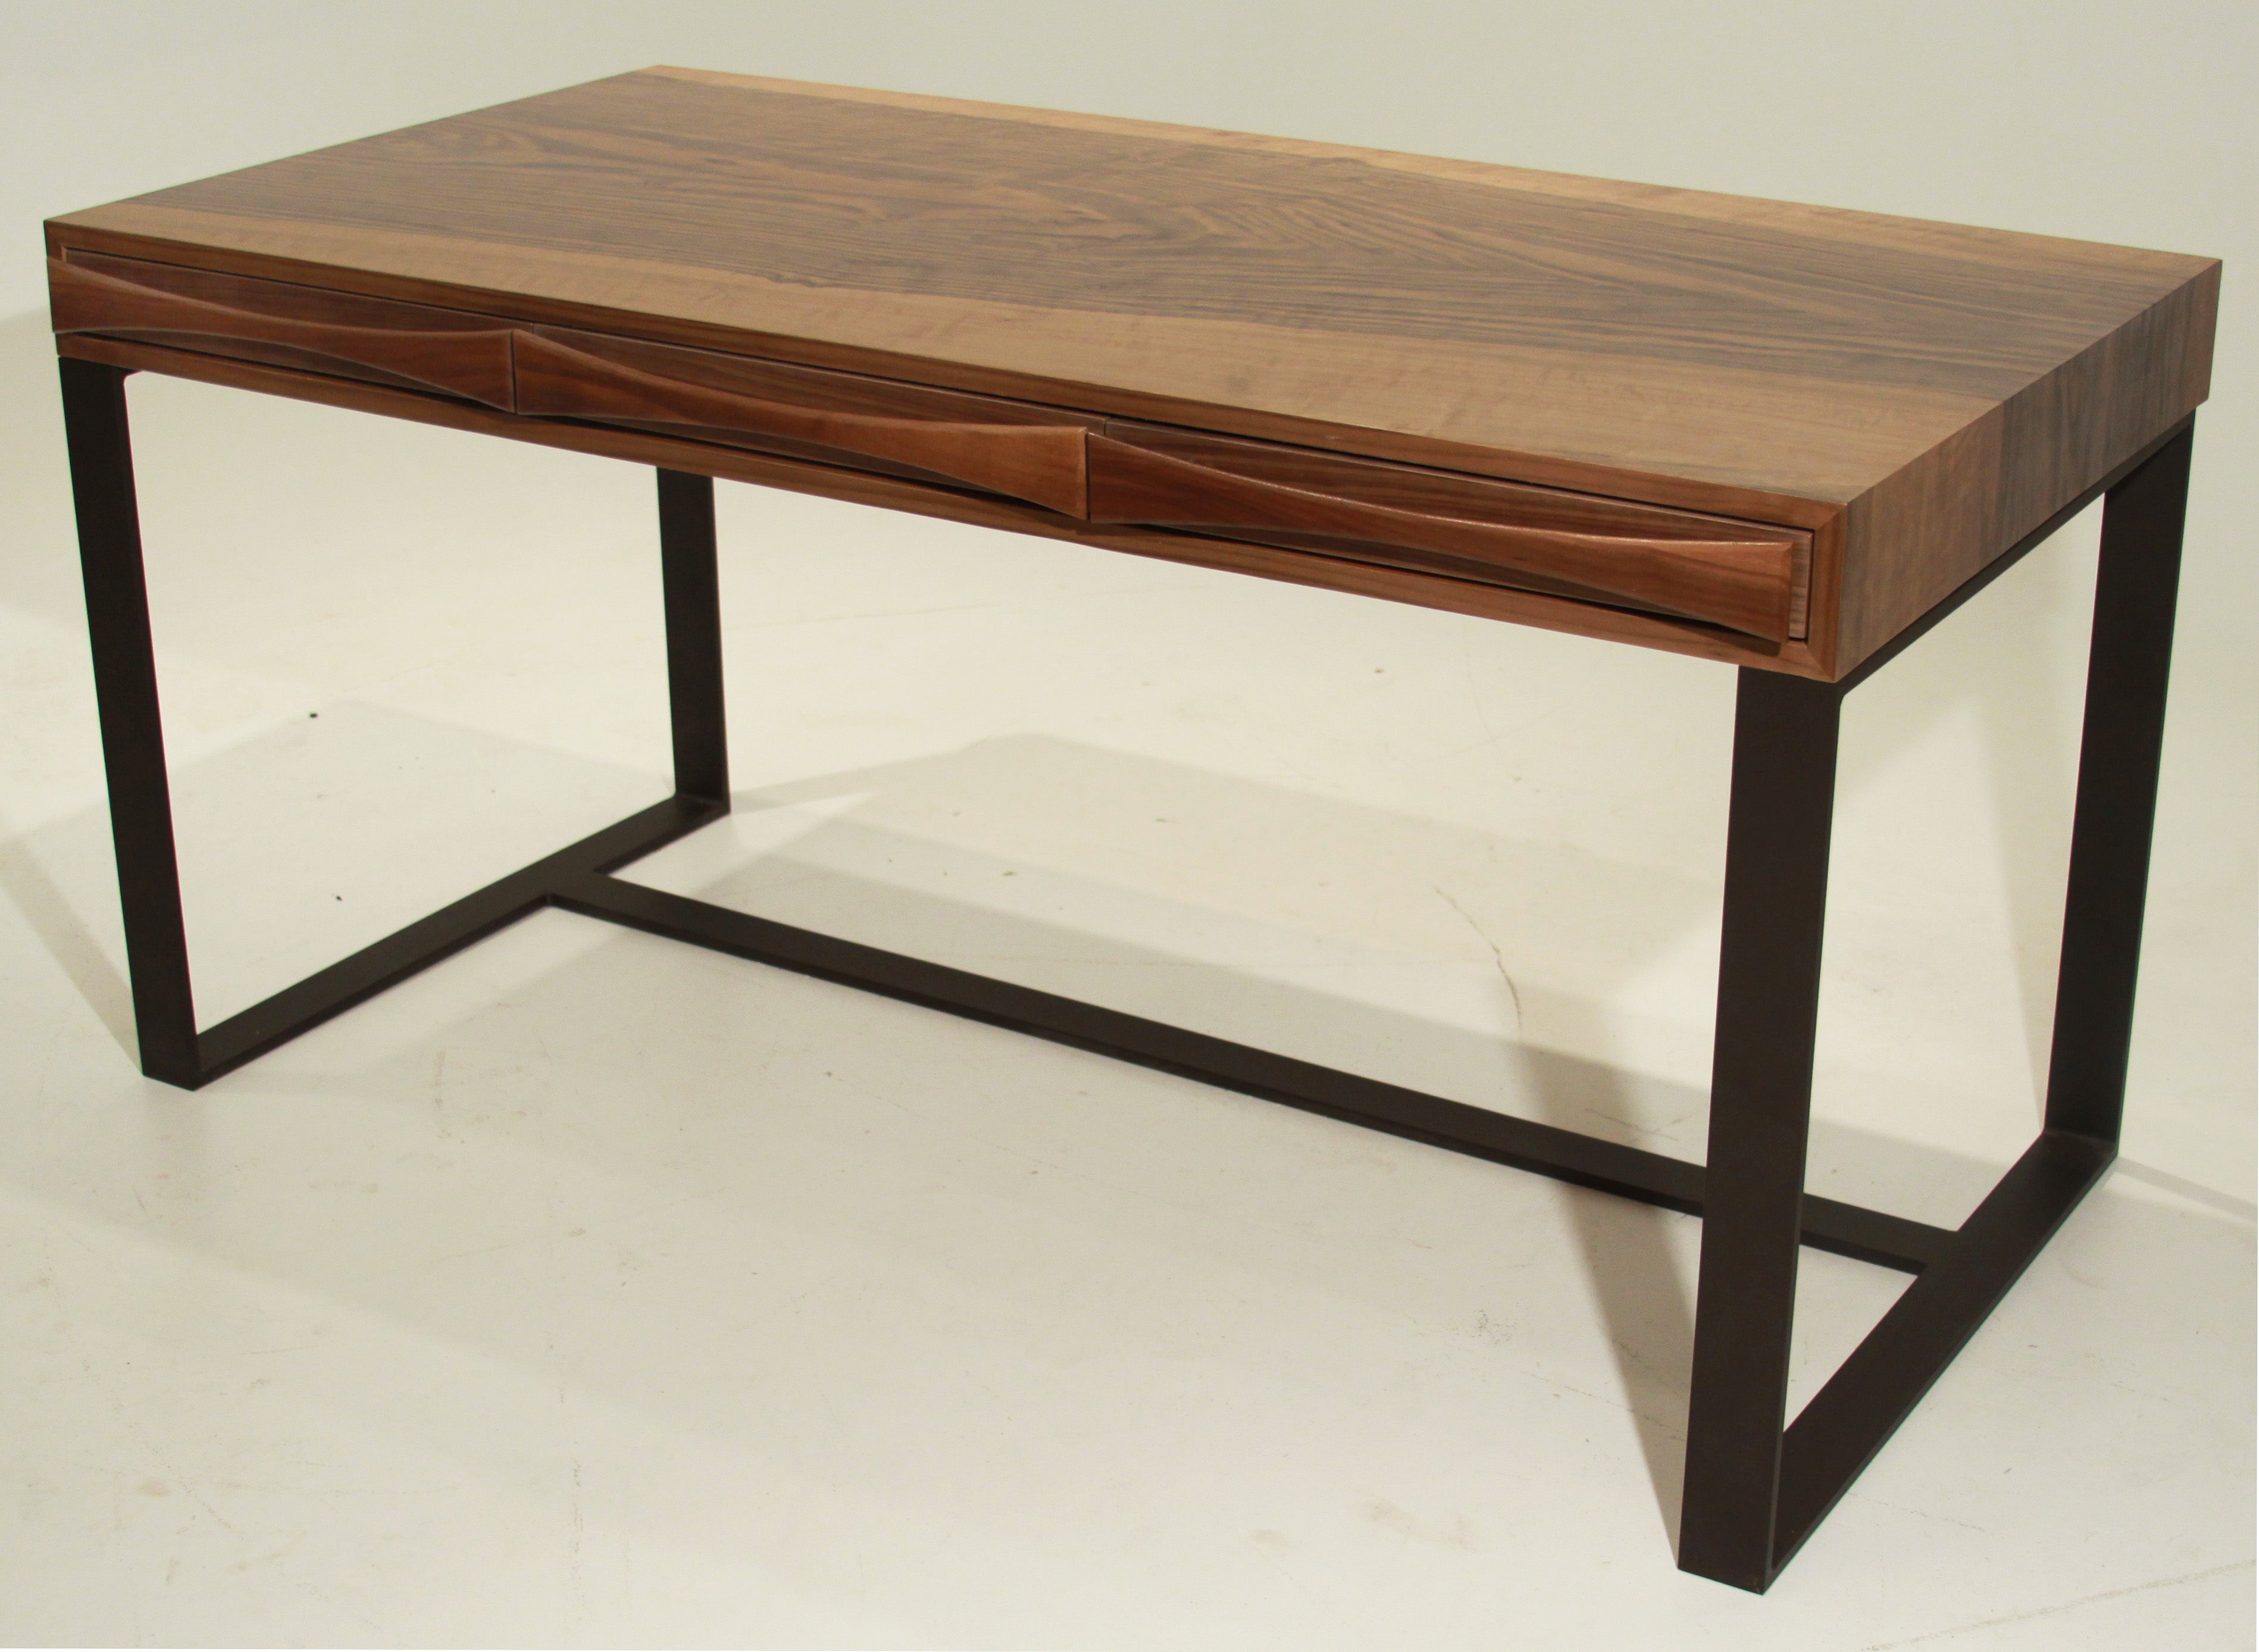 The Angled Quadrar Desk by Thomas Hayes Studio